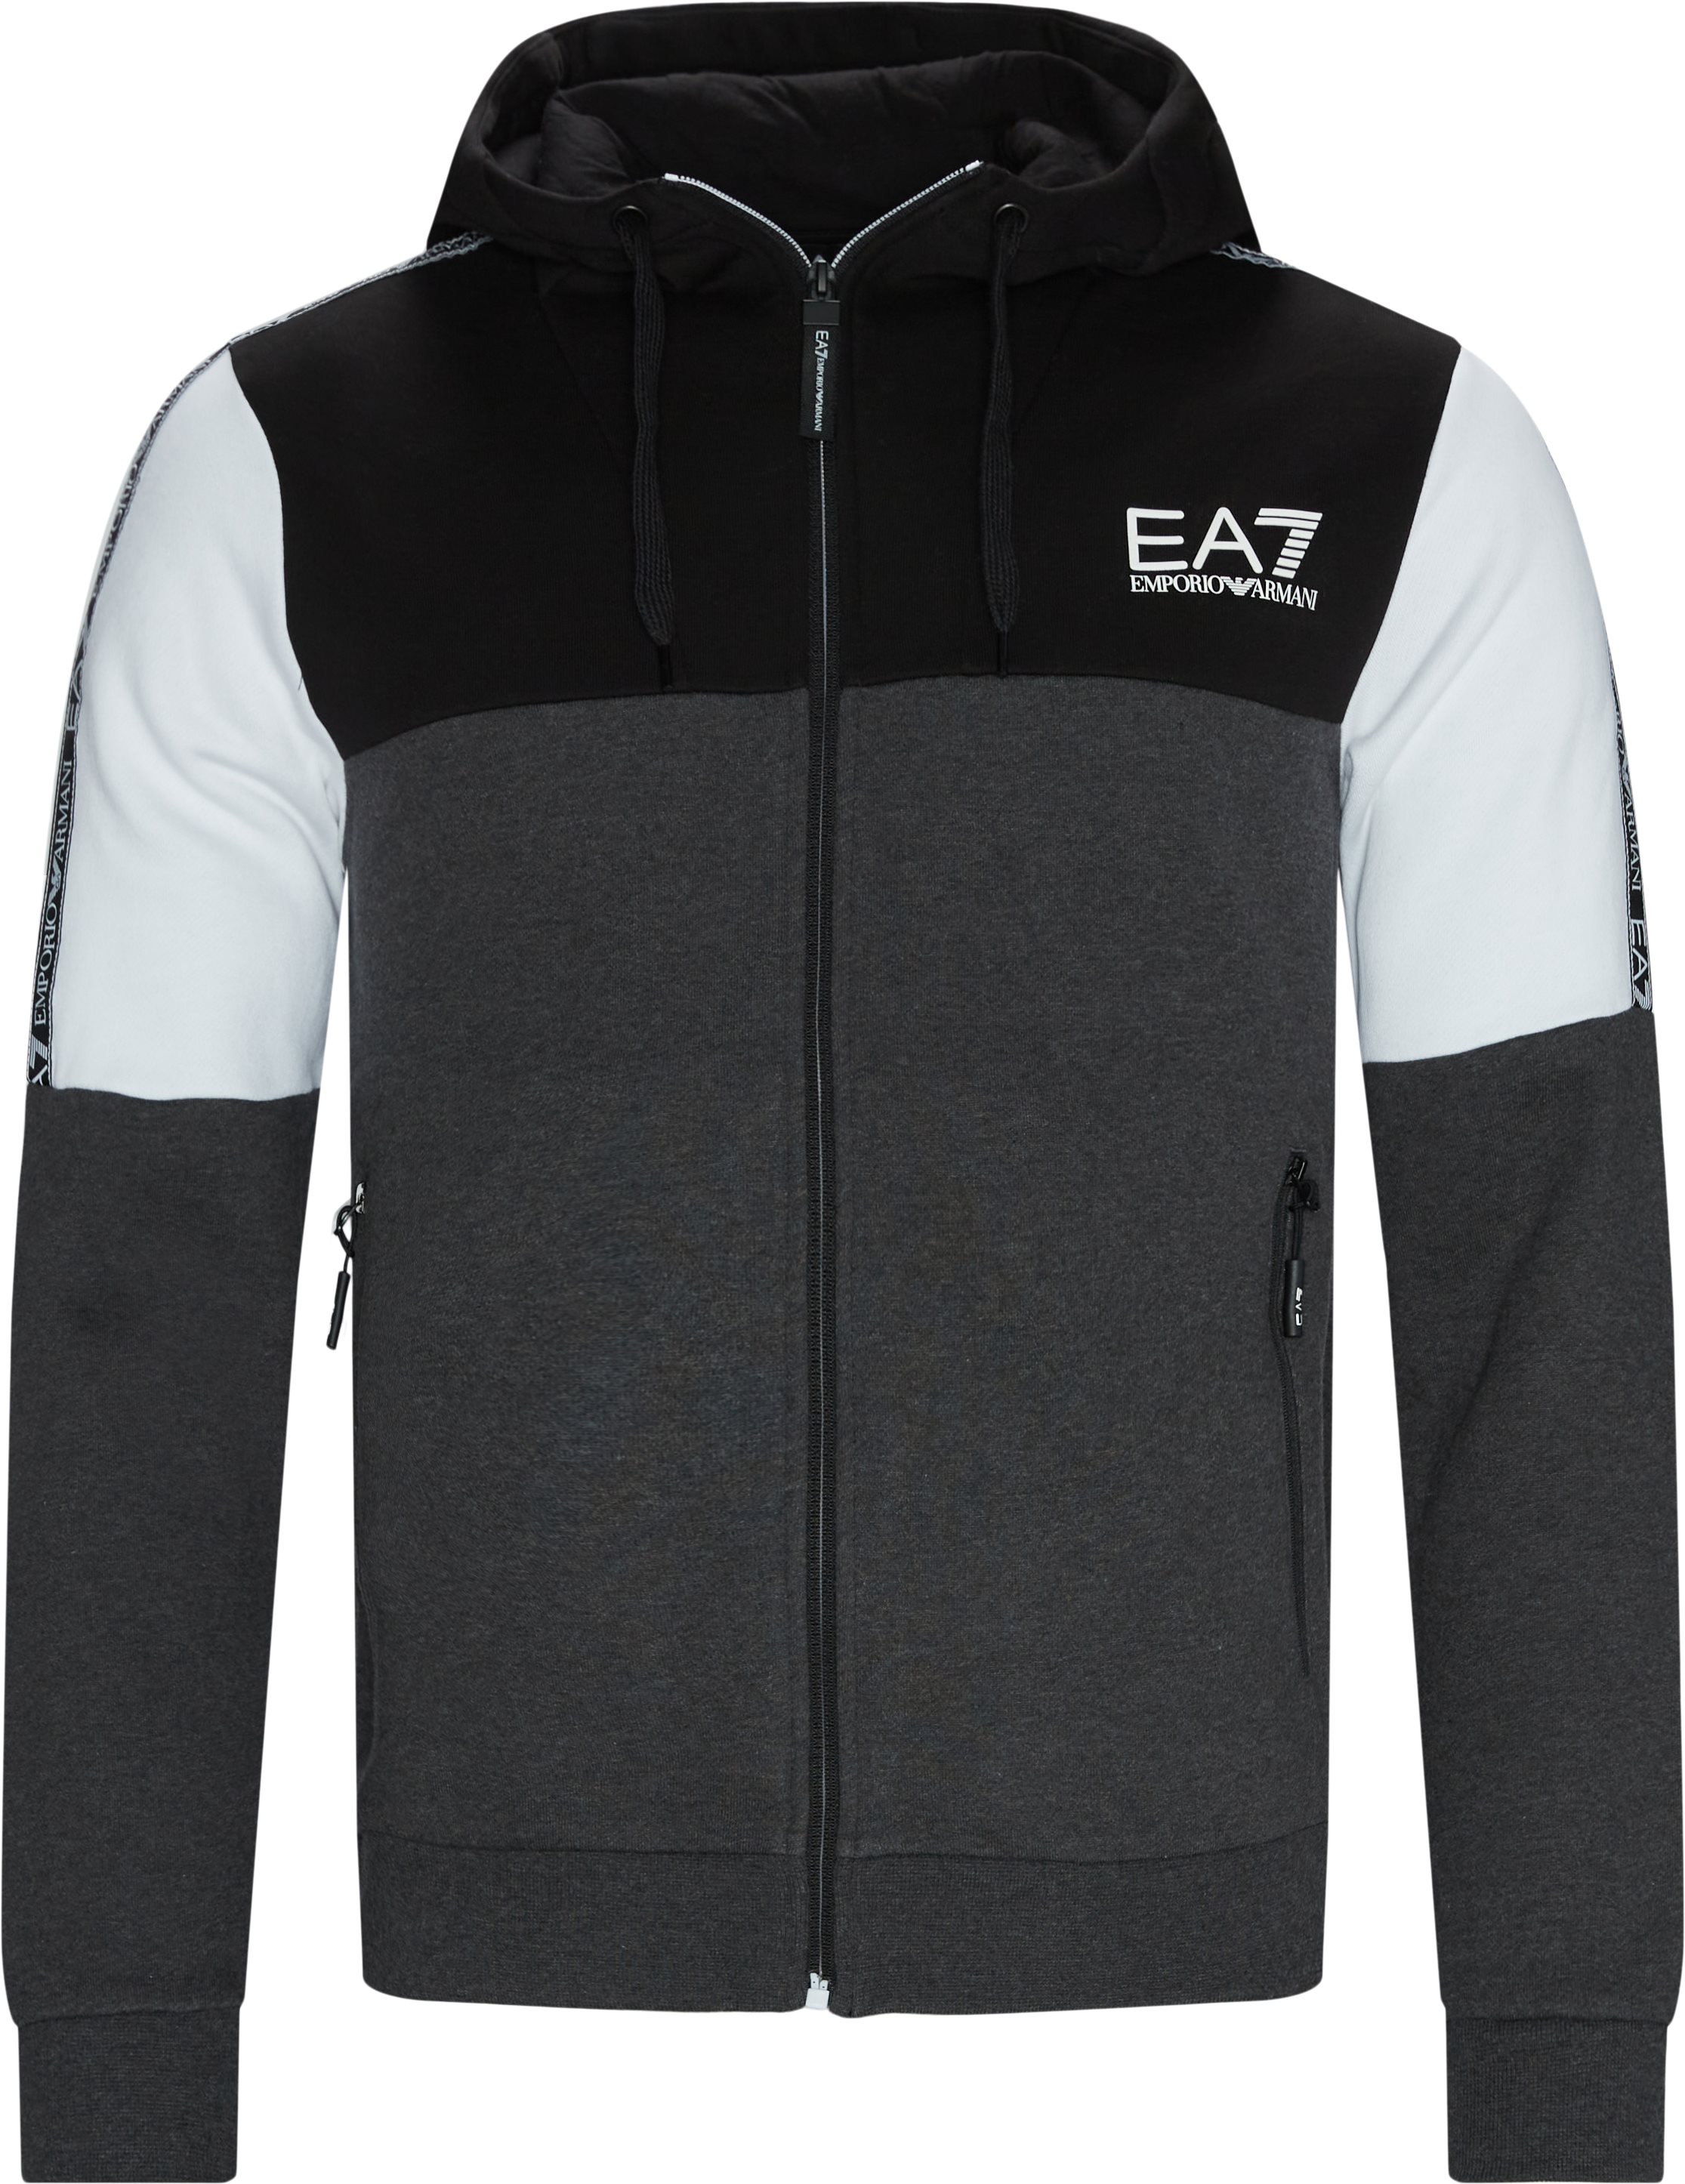 Pj07z-6kpv63 Zip Sweatshirt - Sweatshirts - Regular fit - Black